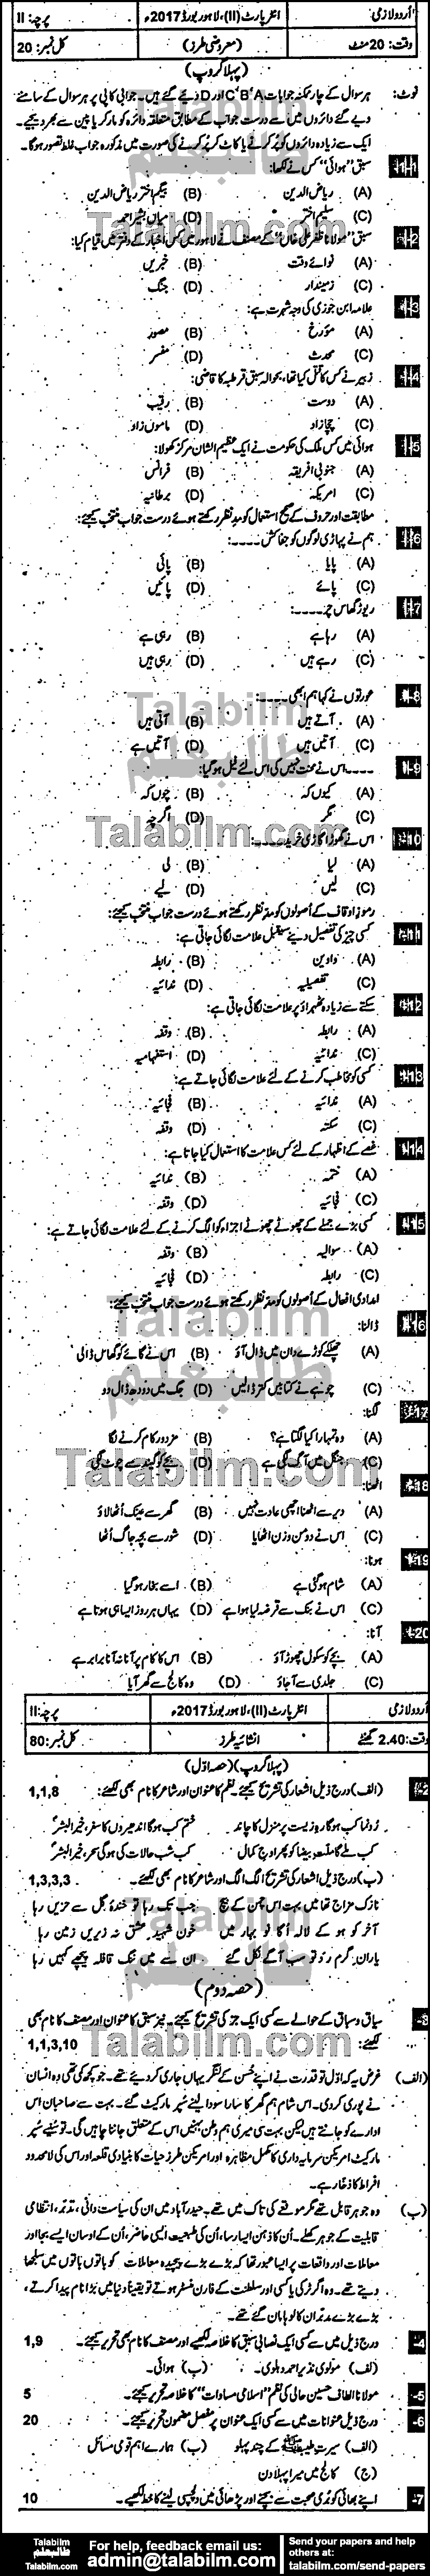 Urdu 0 past paper for Group-I 2017